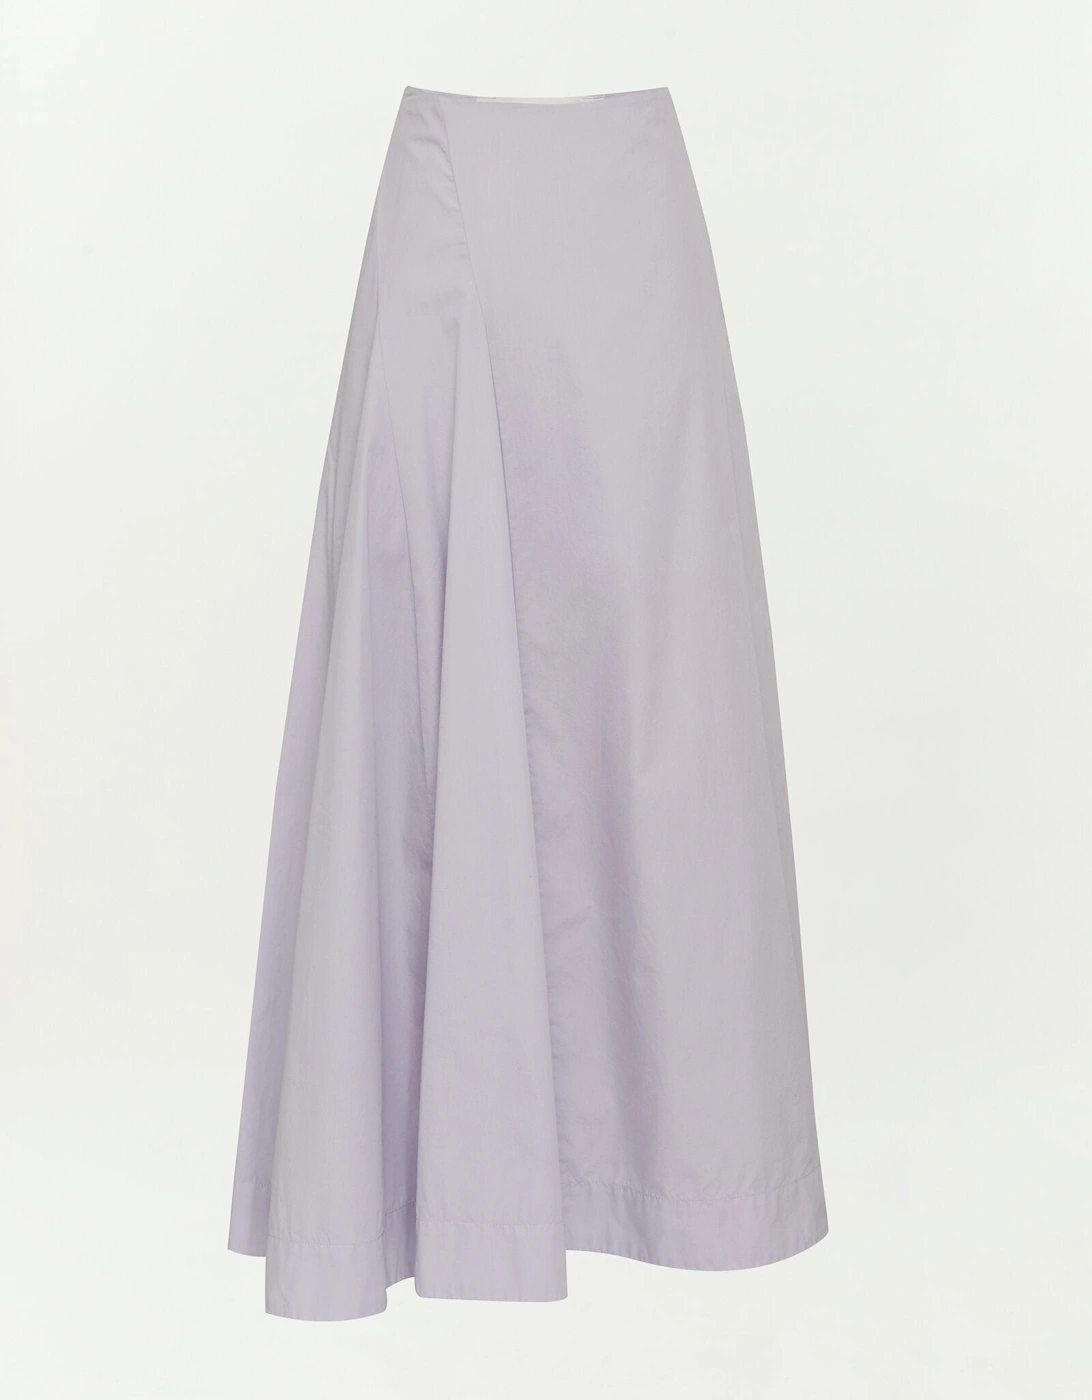 Libra Skirt in Lavendula